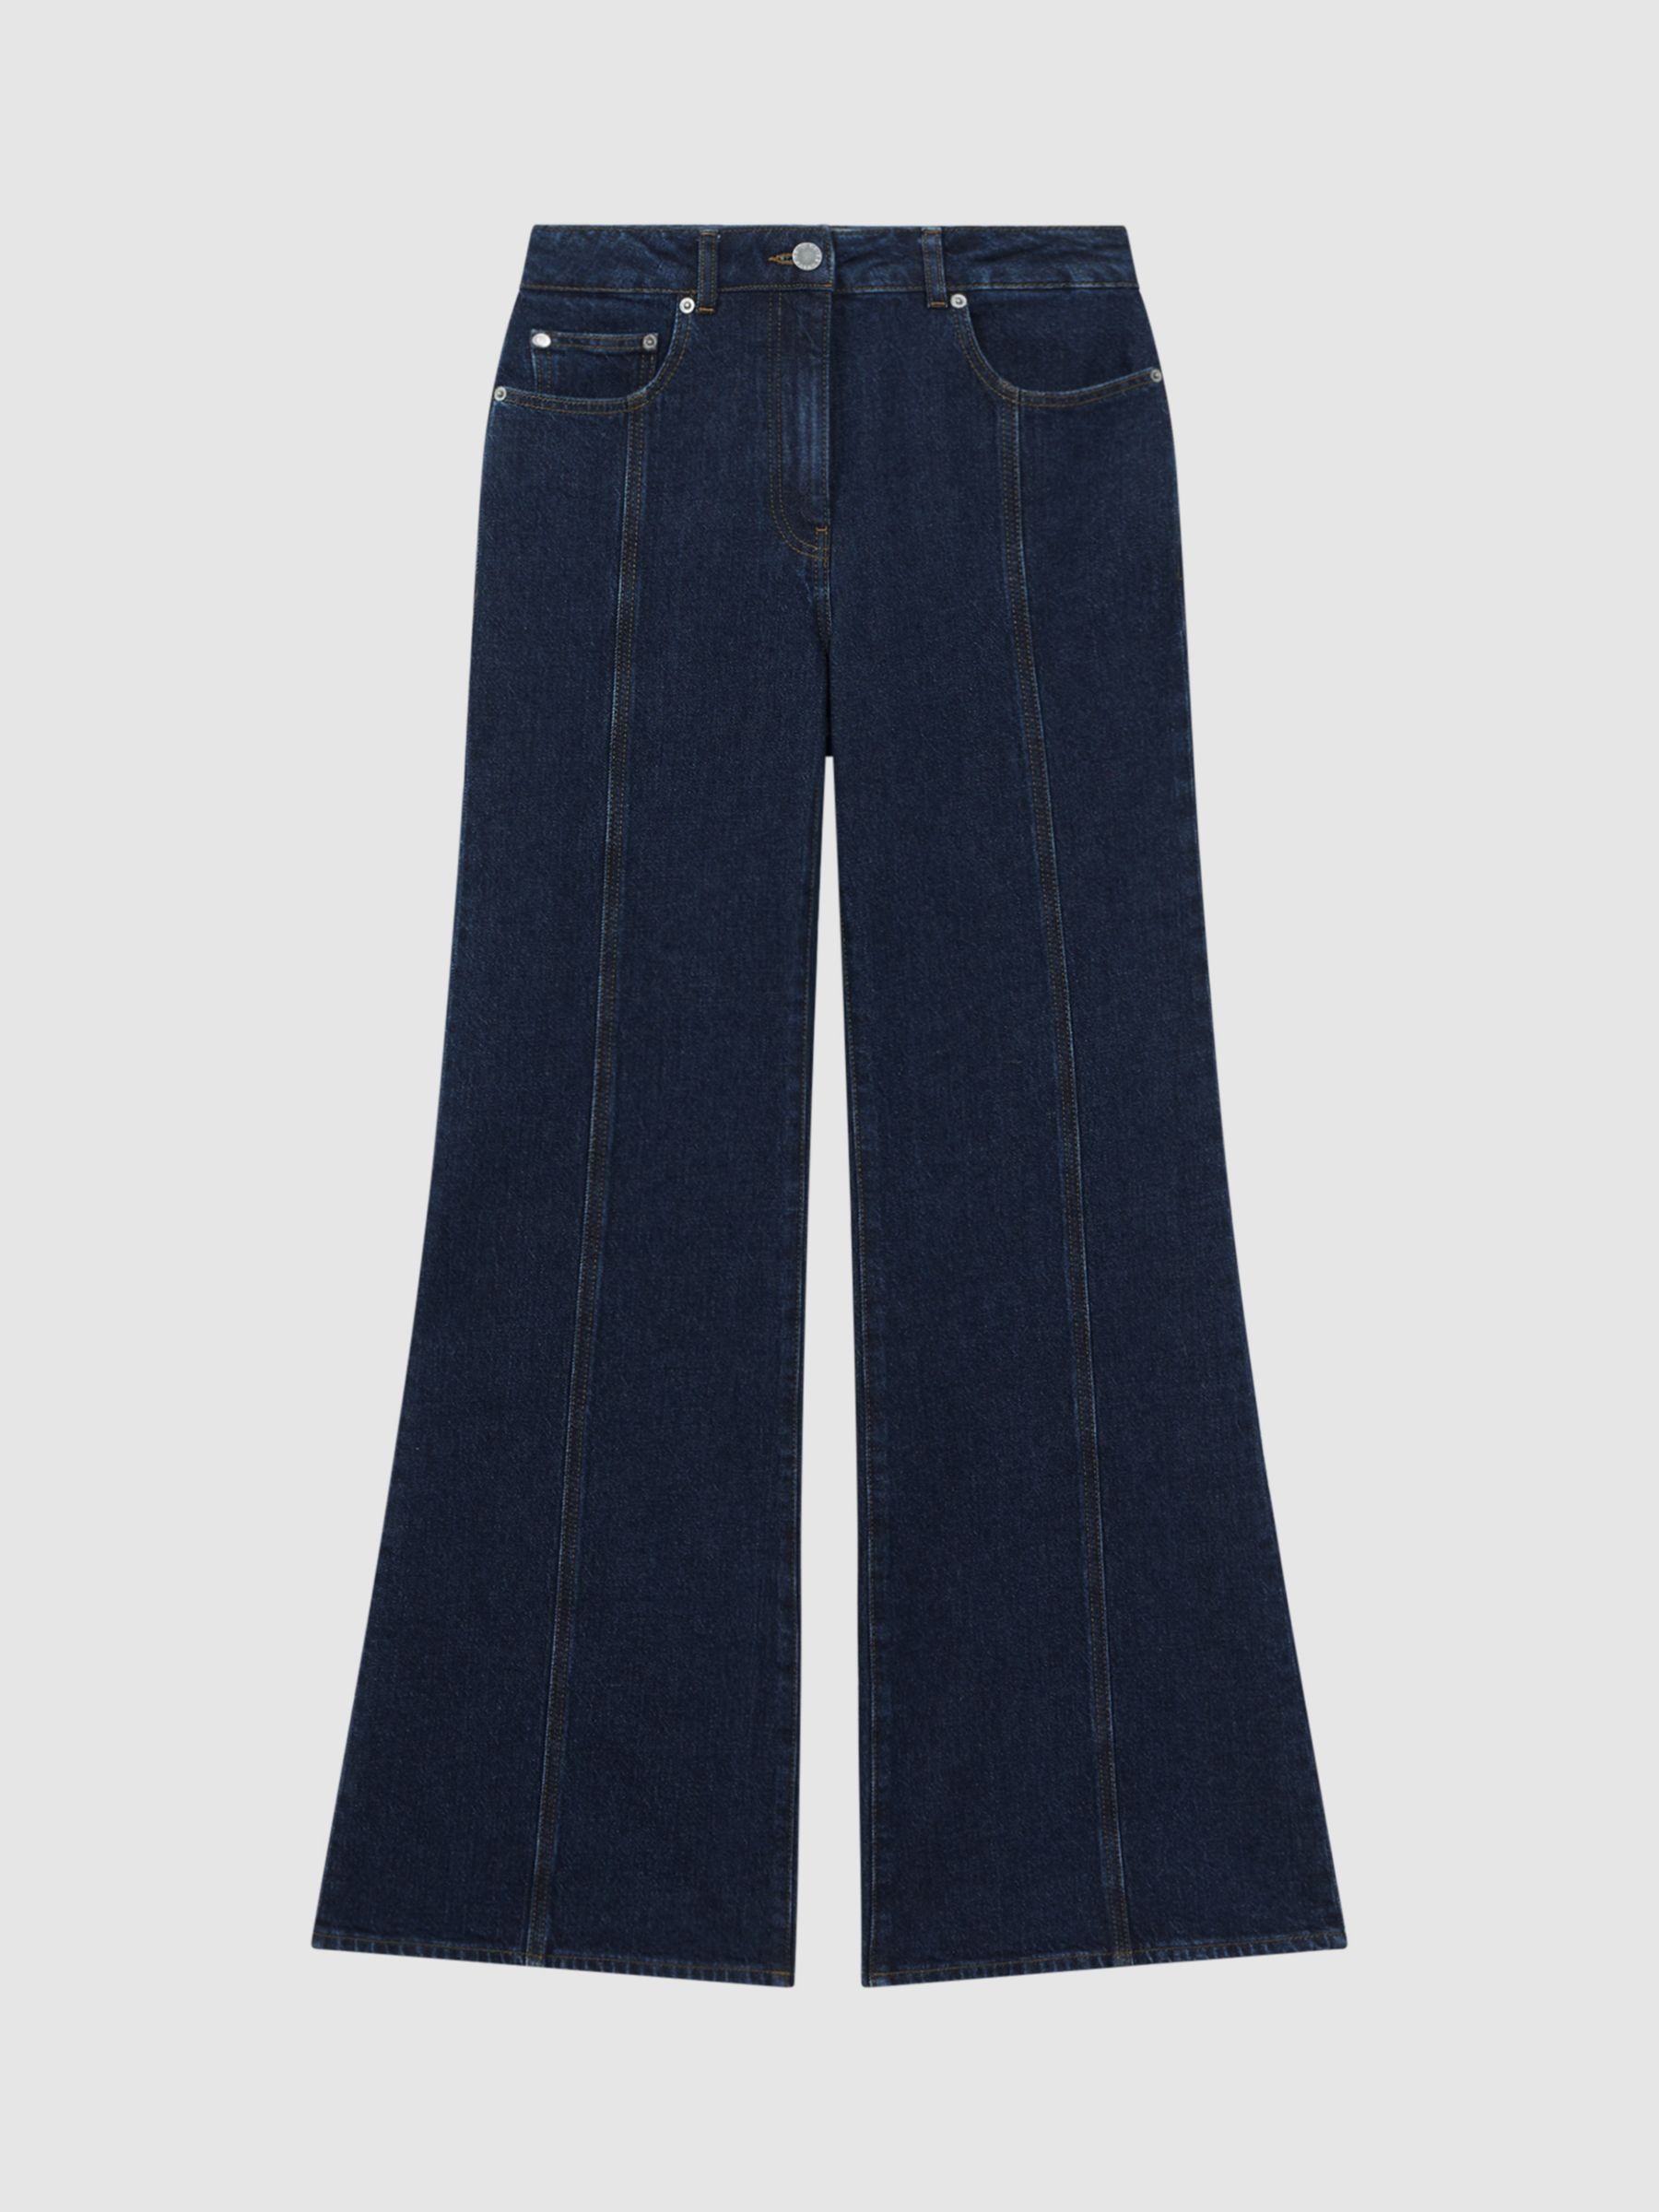 Reiss Petite Juniper Flared Jeans, Dark Blue, 28